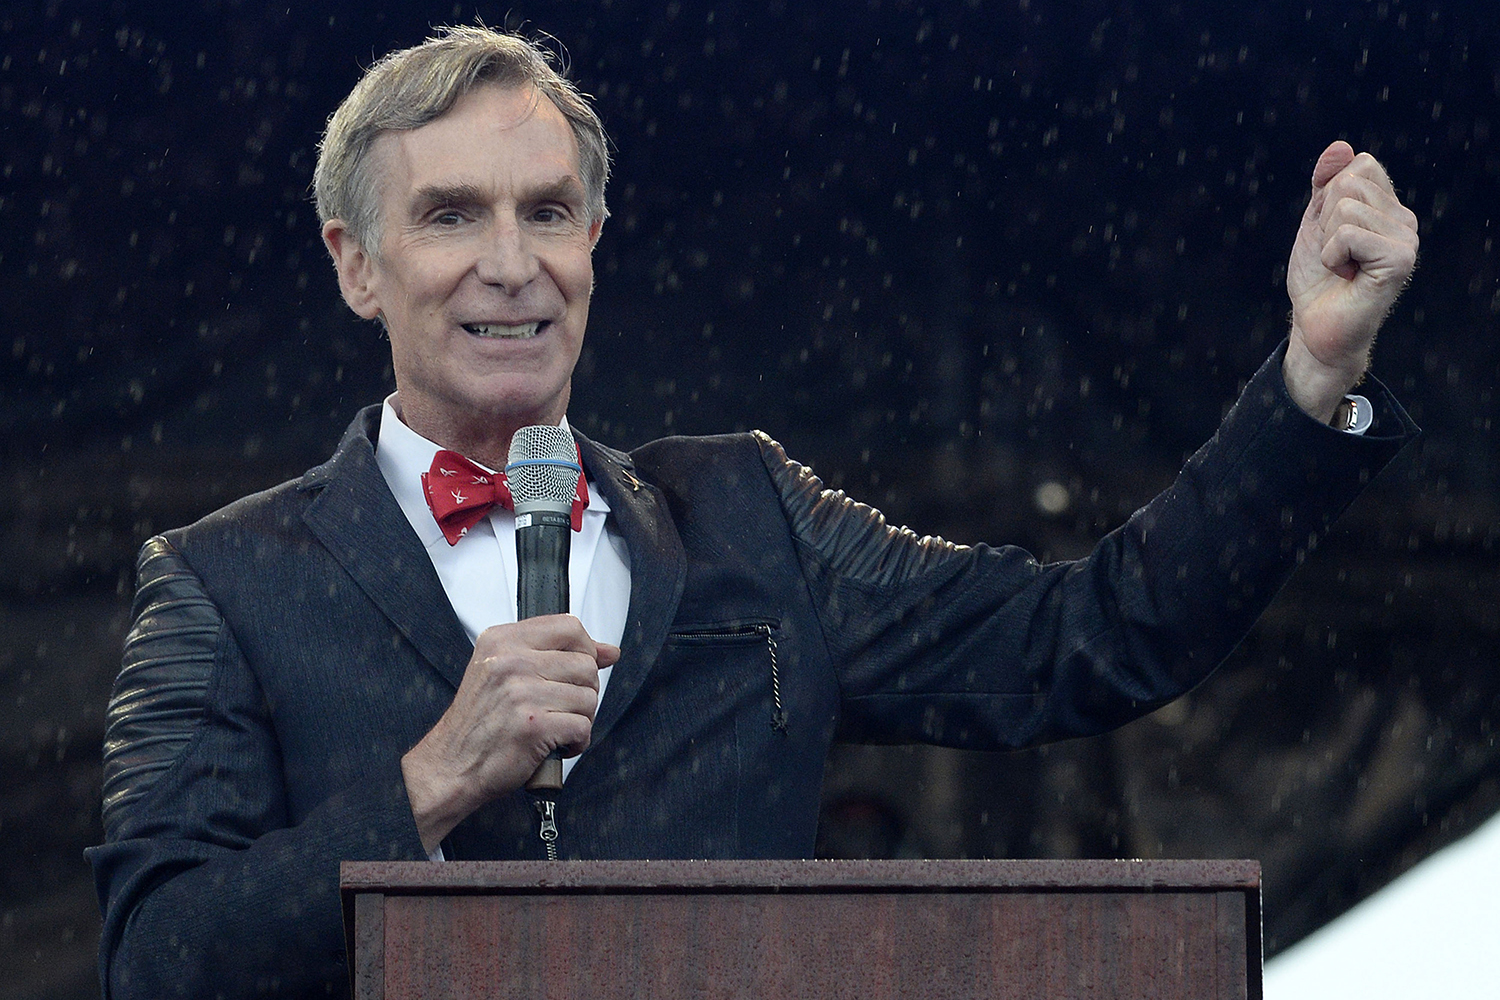 Bill Nye Speaking